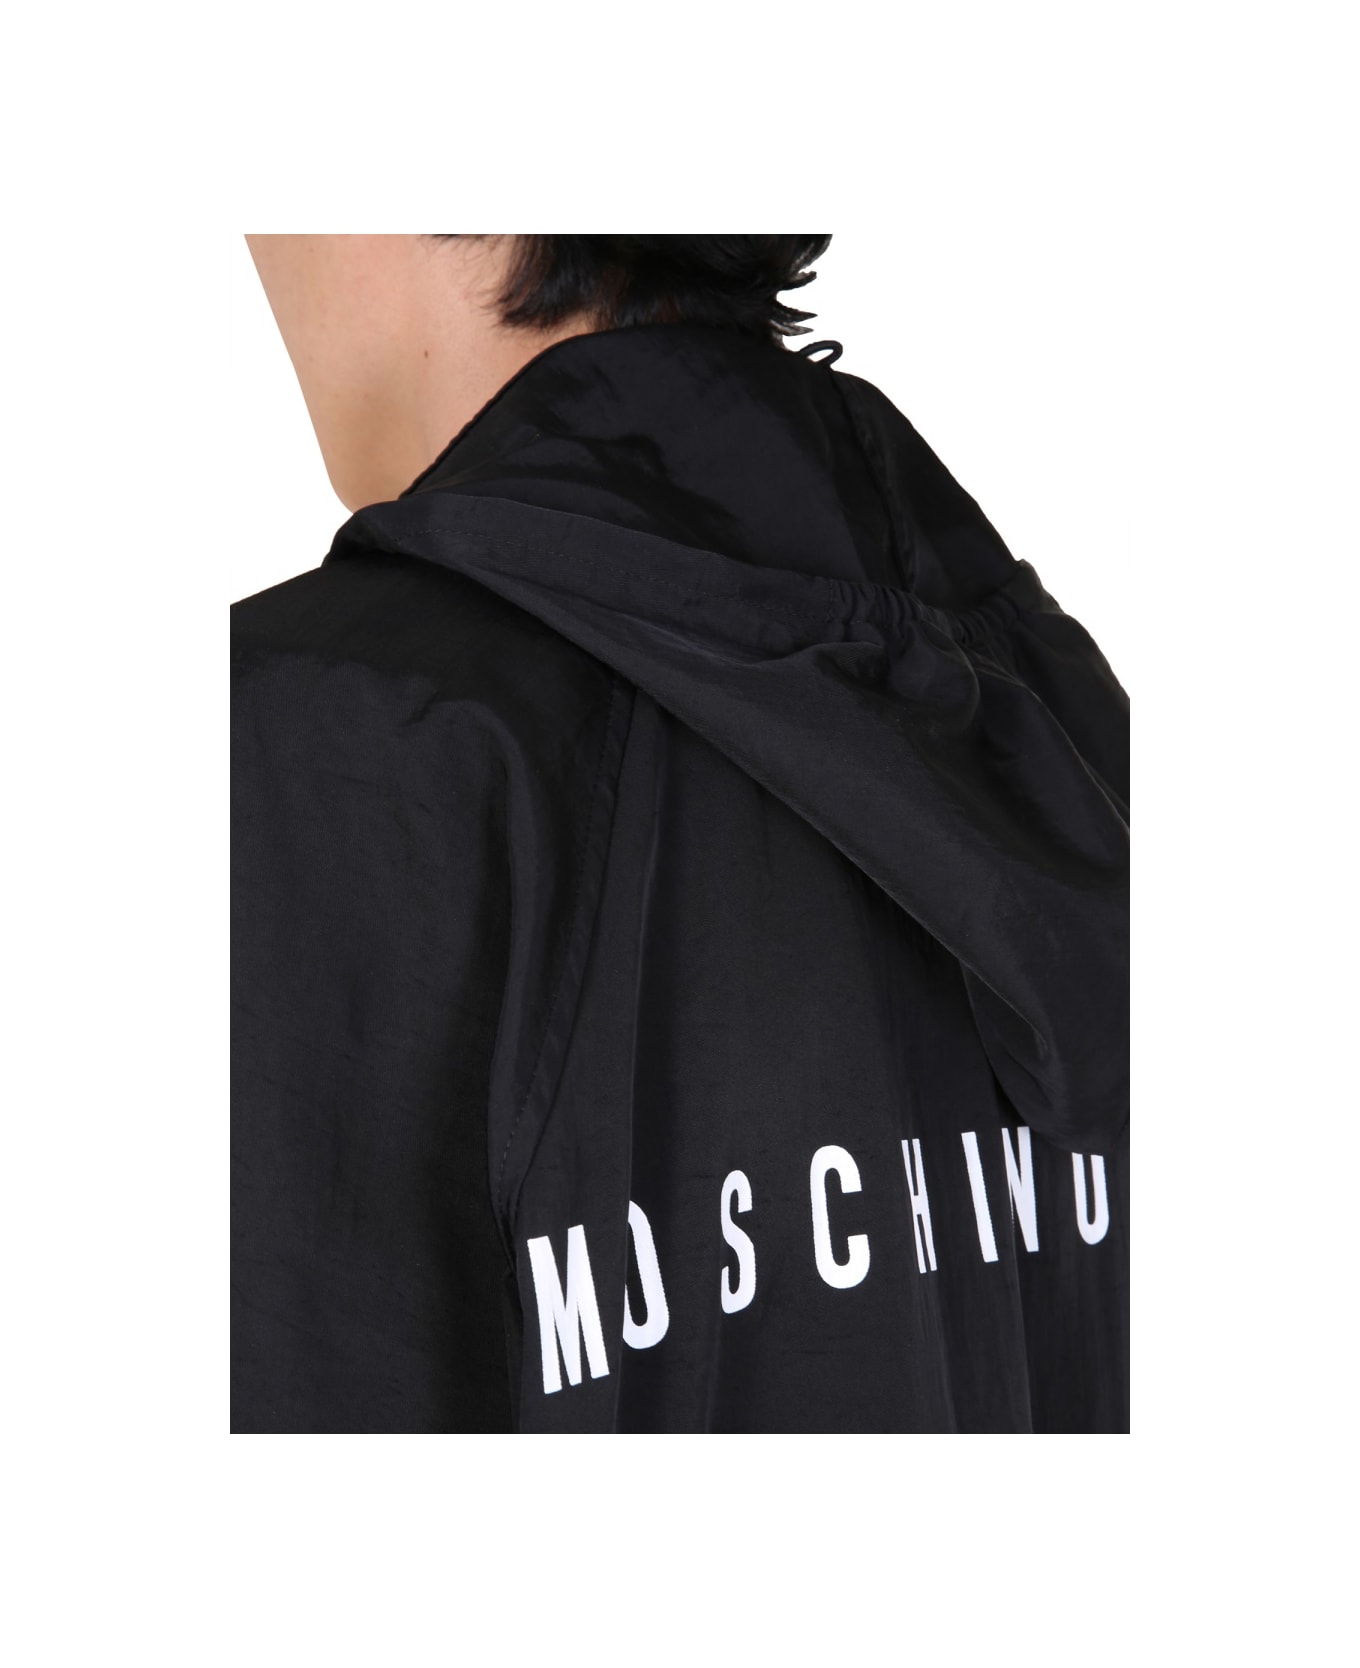 Moschino Wind Jacket - BLACK